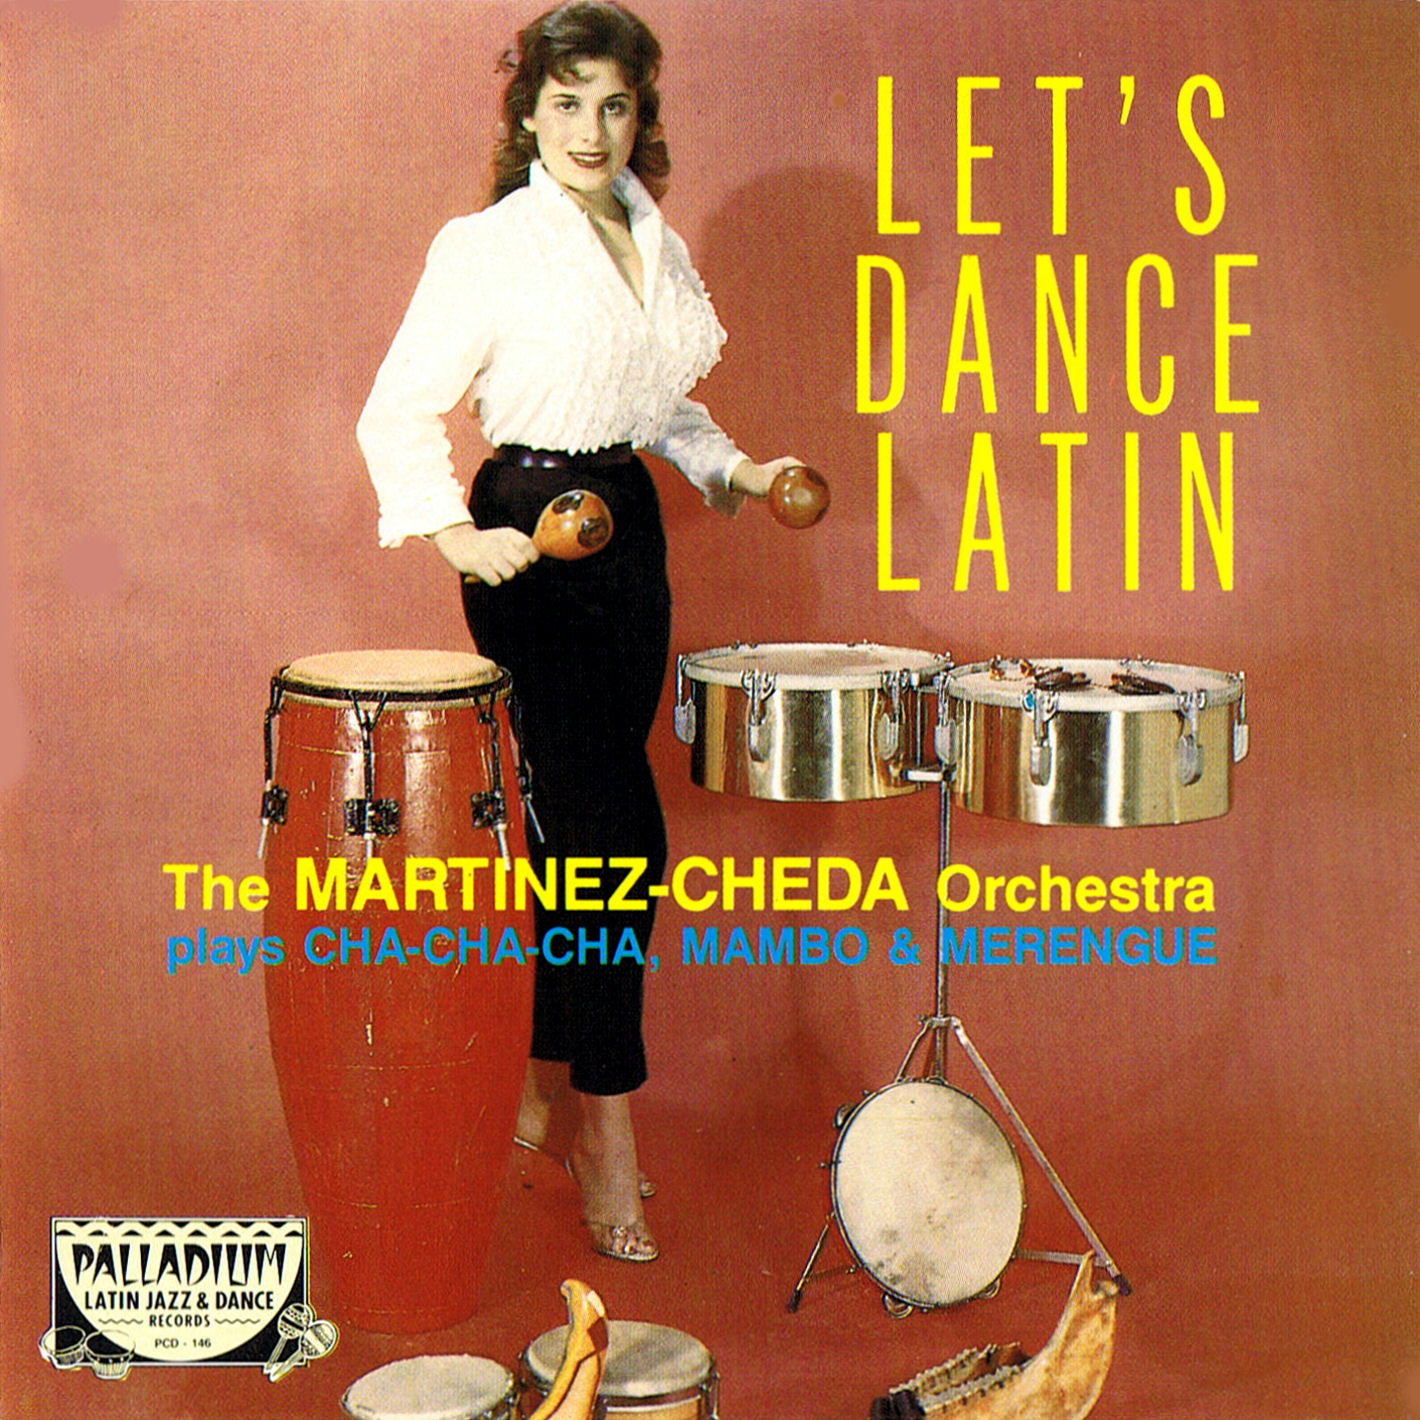 Let's dance latin-Martinez-Cheda Orch-frente